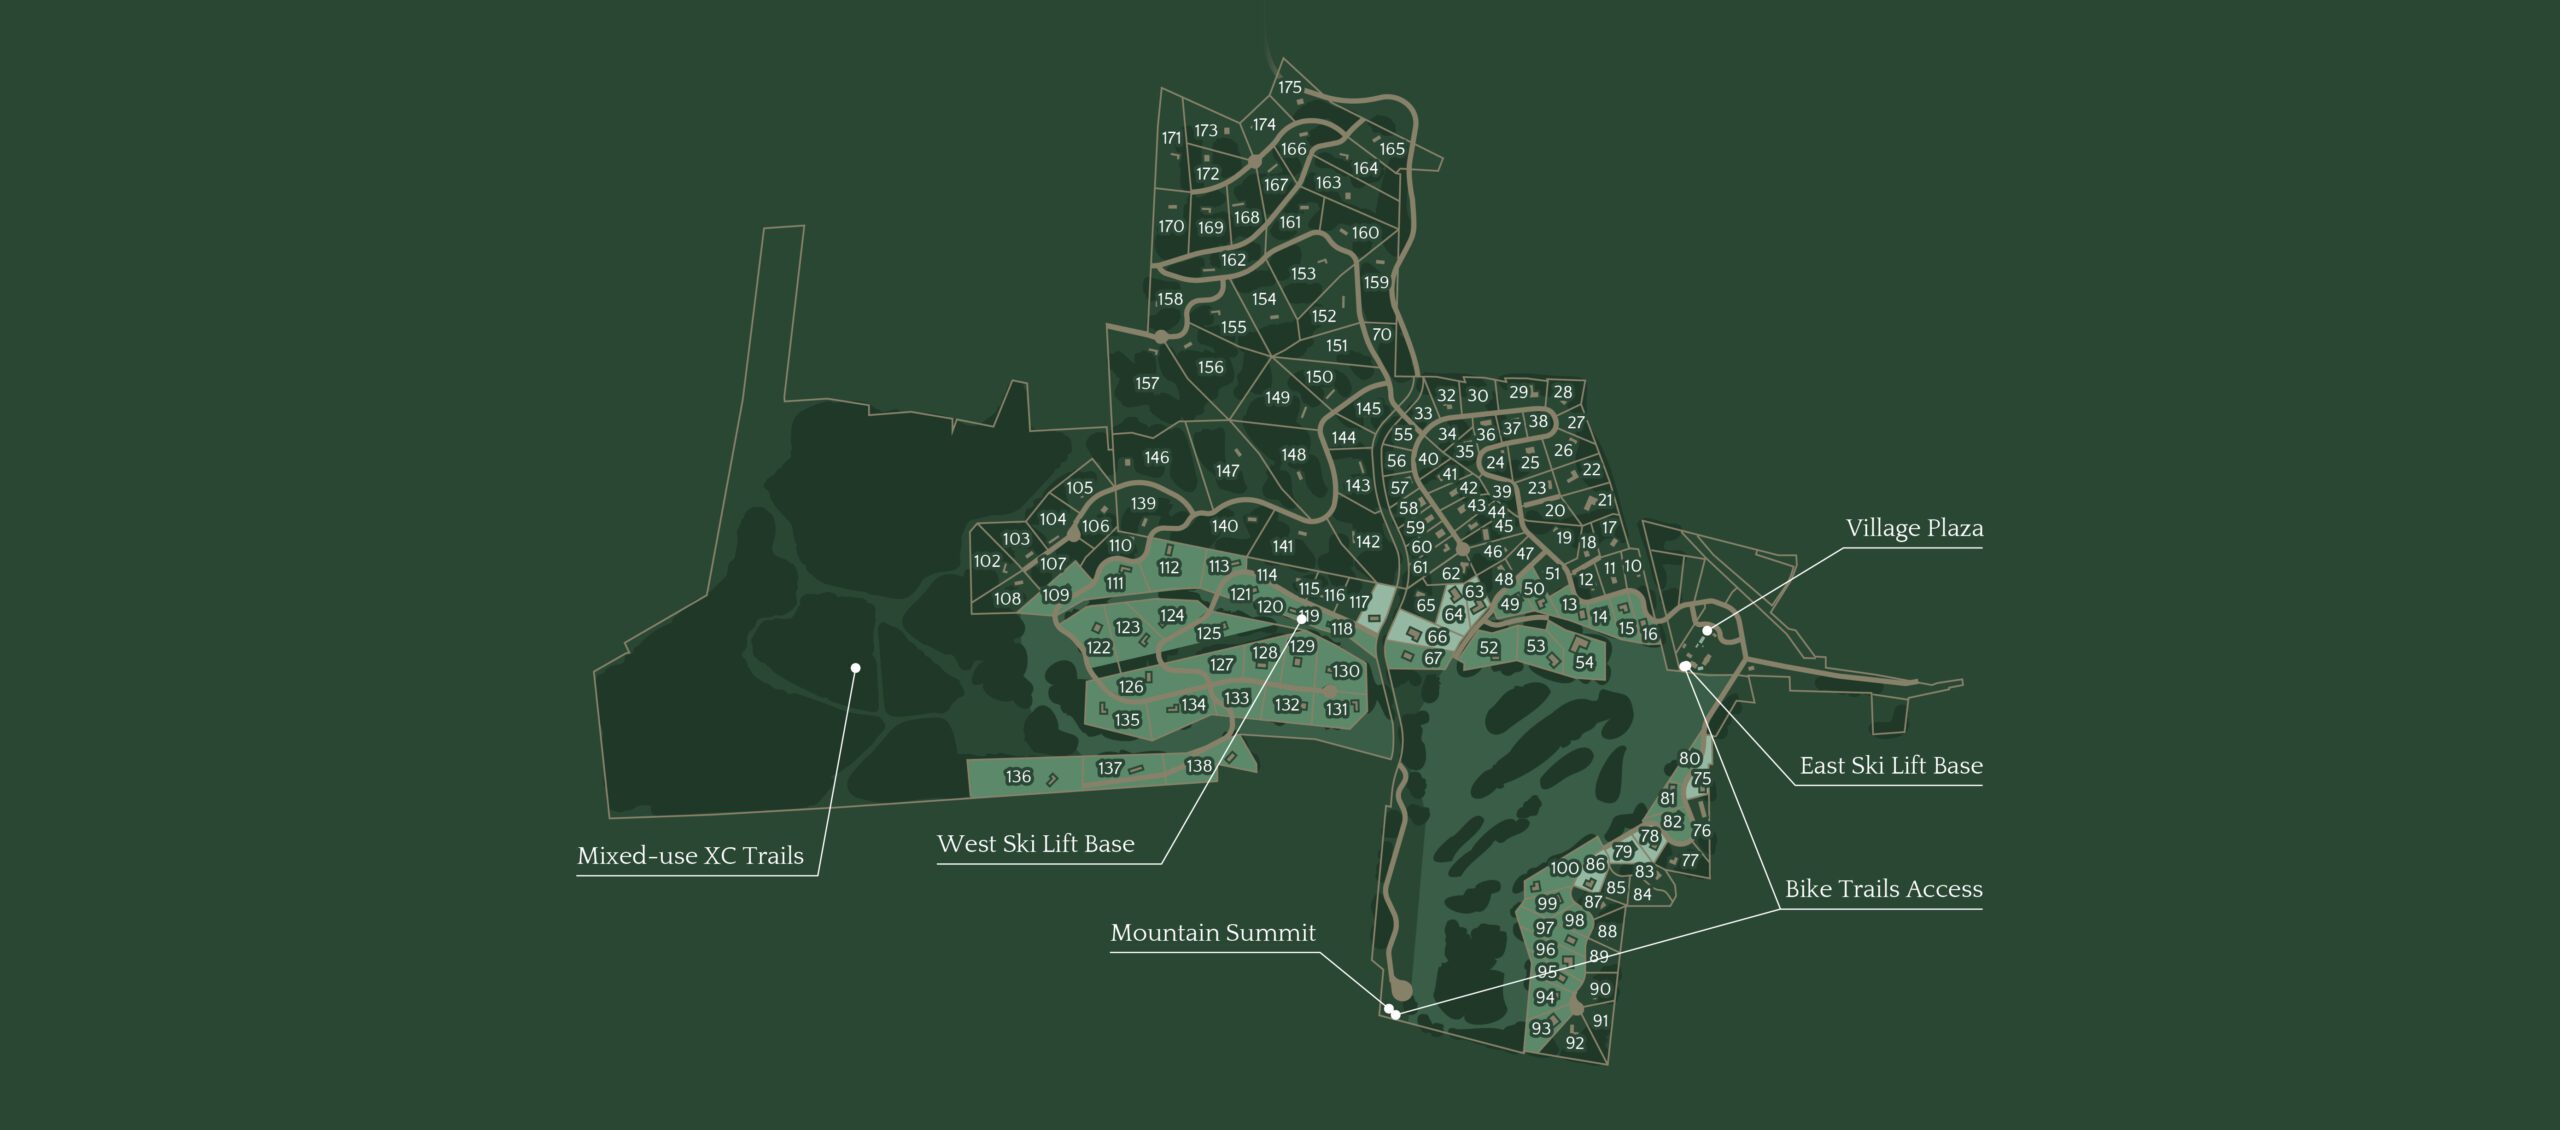 Deer Mountain Village community master plan graphic.